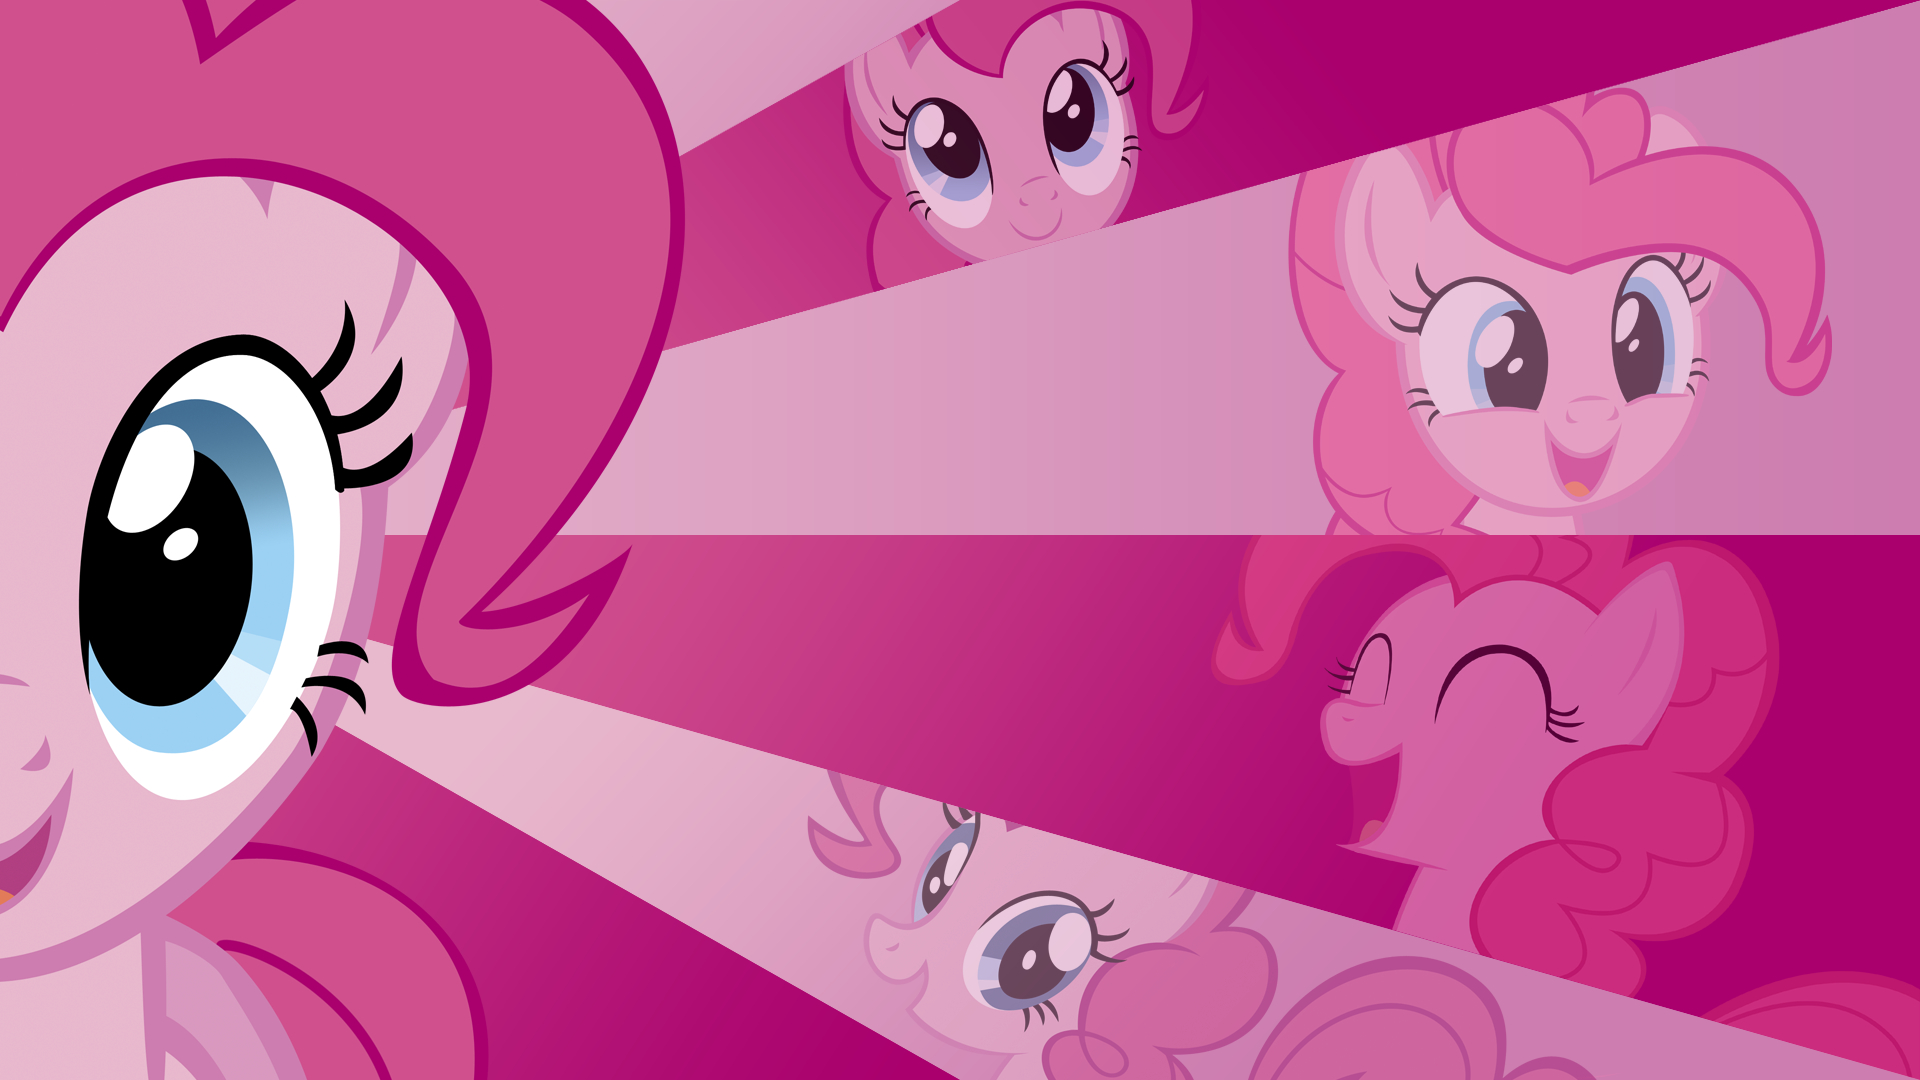 1920x1080 Pinkie Pie Wallpaper: Pinkie Pie Wallpaper | Pinkie pie, My little pony wallpaper, Live wallpapers